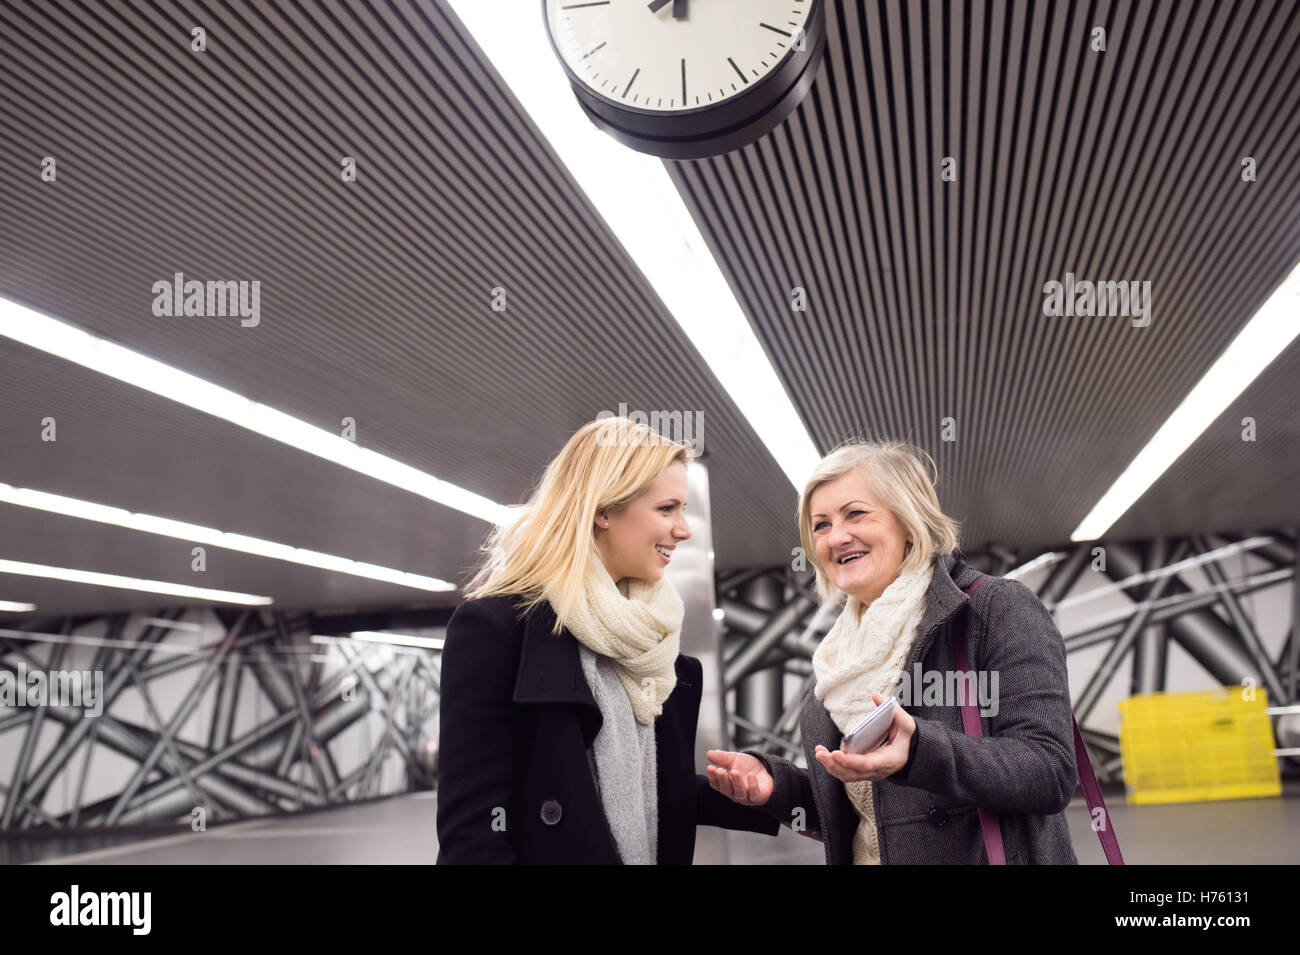 Two beautiful women standing at the underground platform, talkin Stock Photo